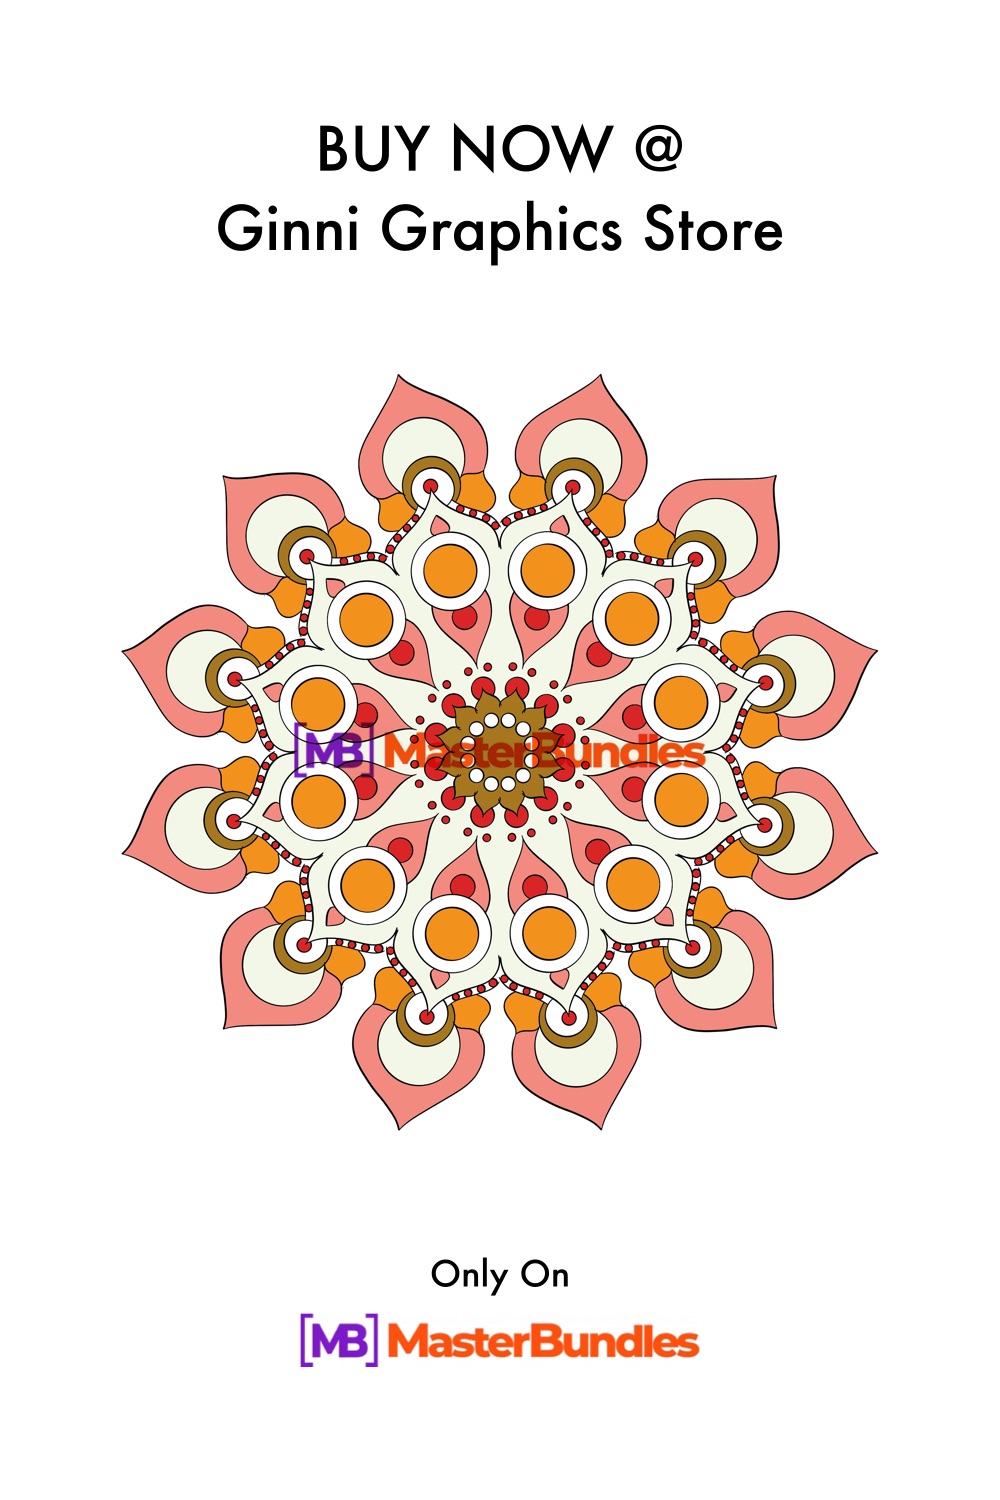 Colourful Mandala Design - Thin Strokes pinterest preview image.